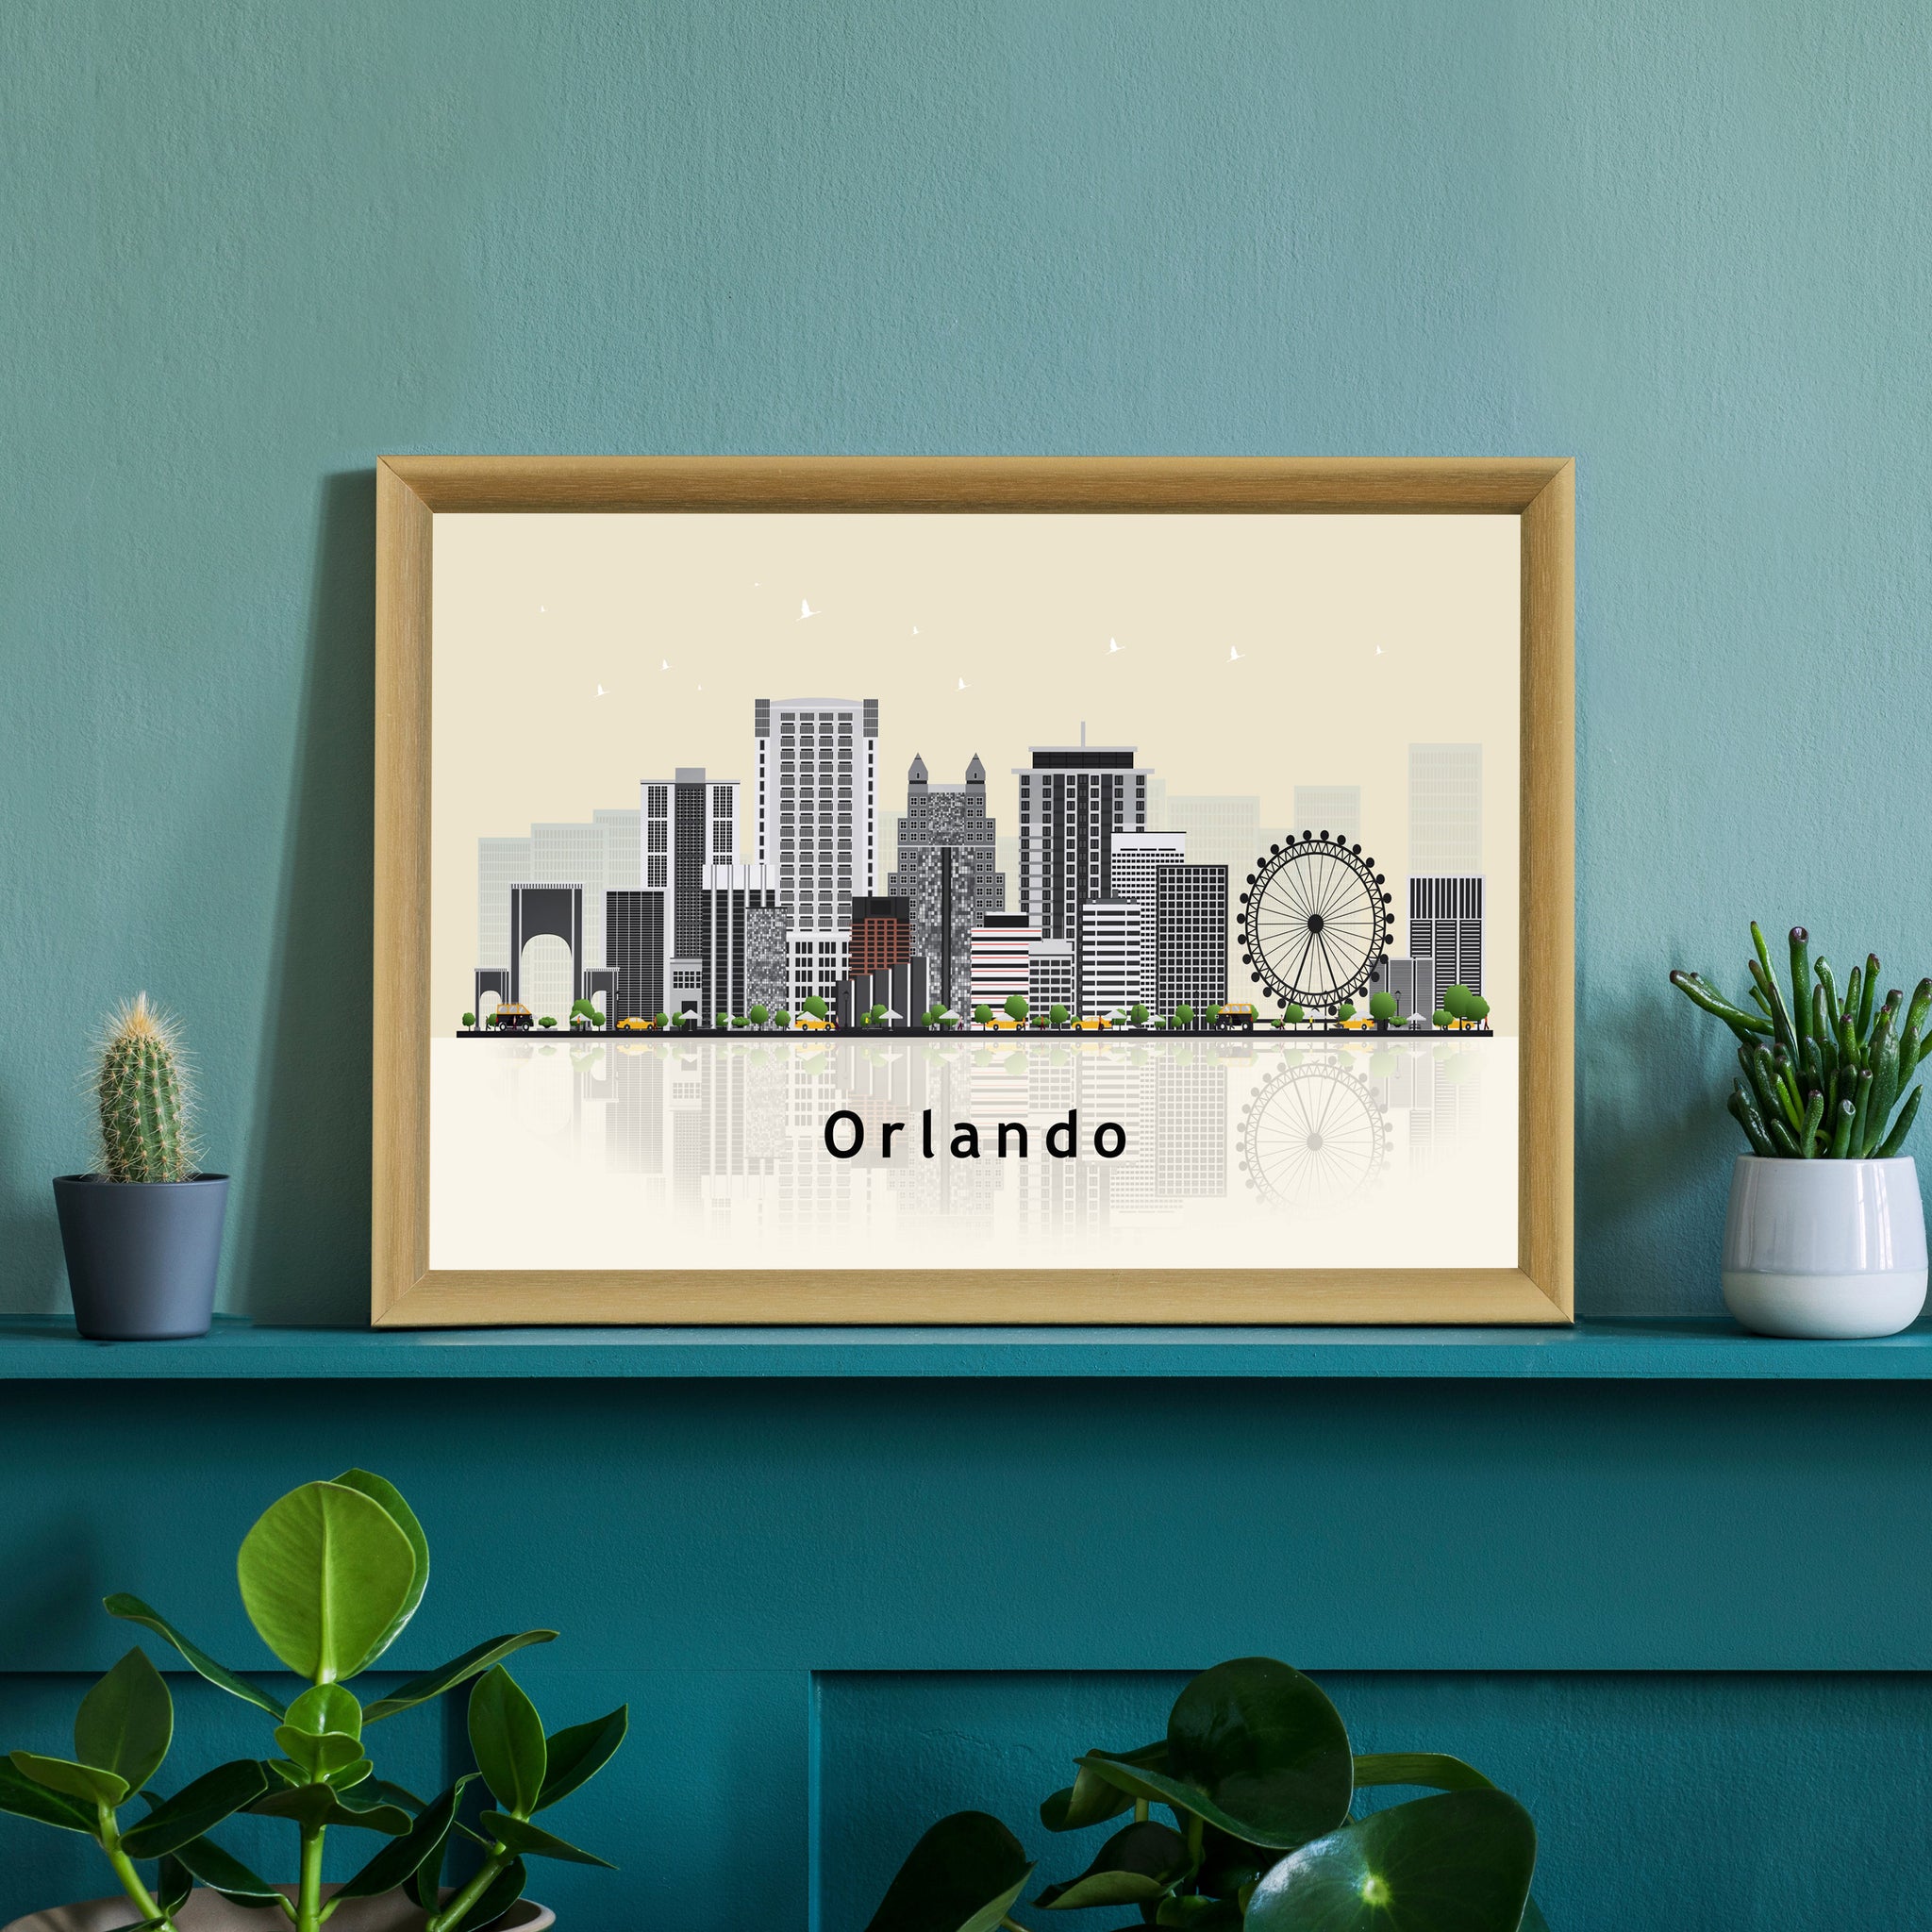 ORLANDO FLORIDA Illustration skyline poster, Florida modern skyline cityscape poster print, Landmark poster, Home wall art decoration